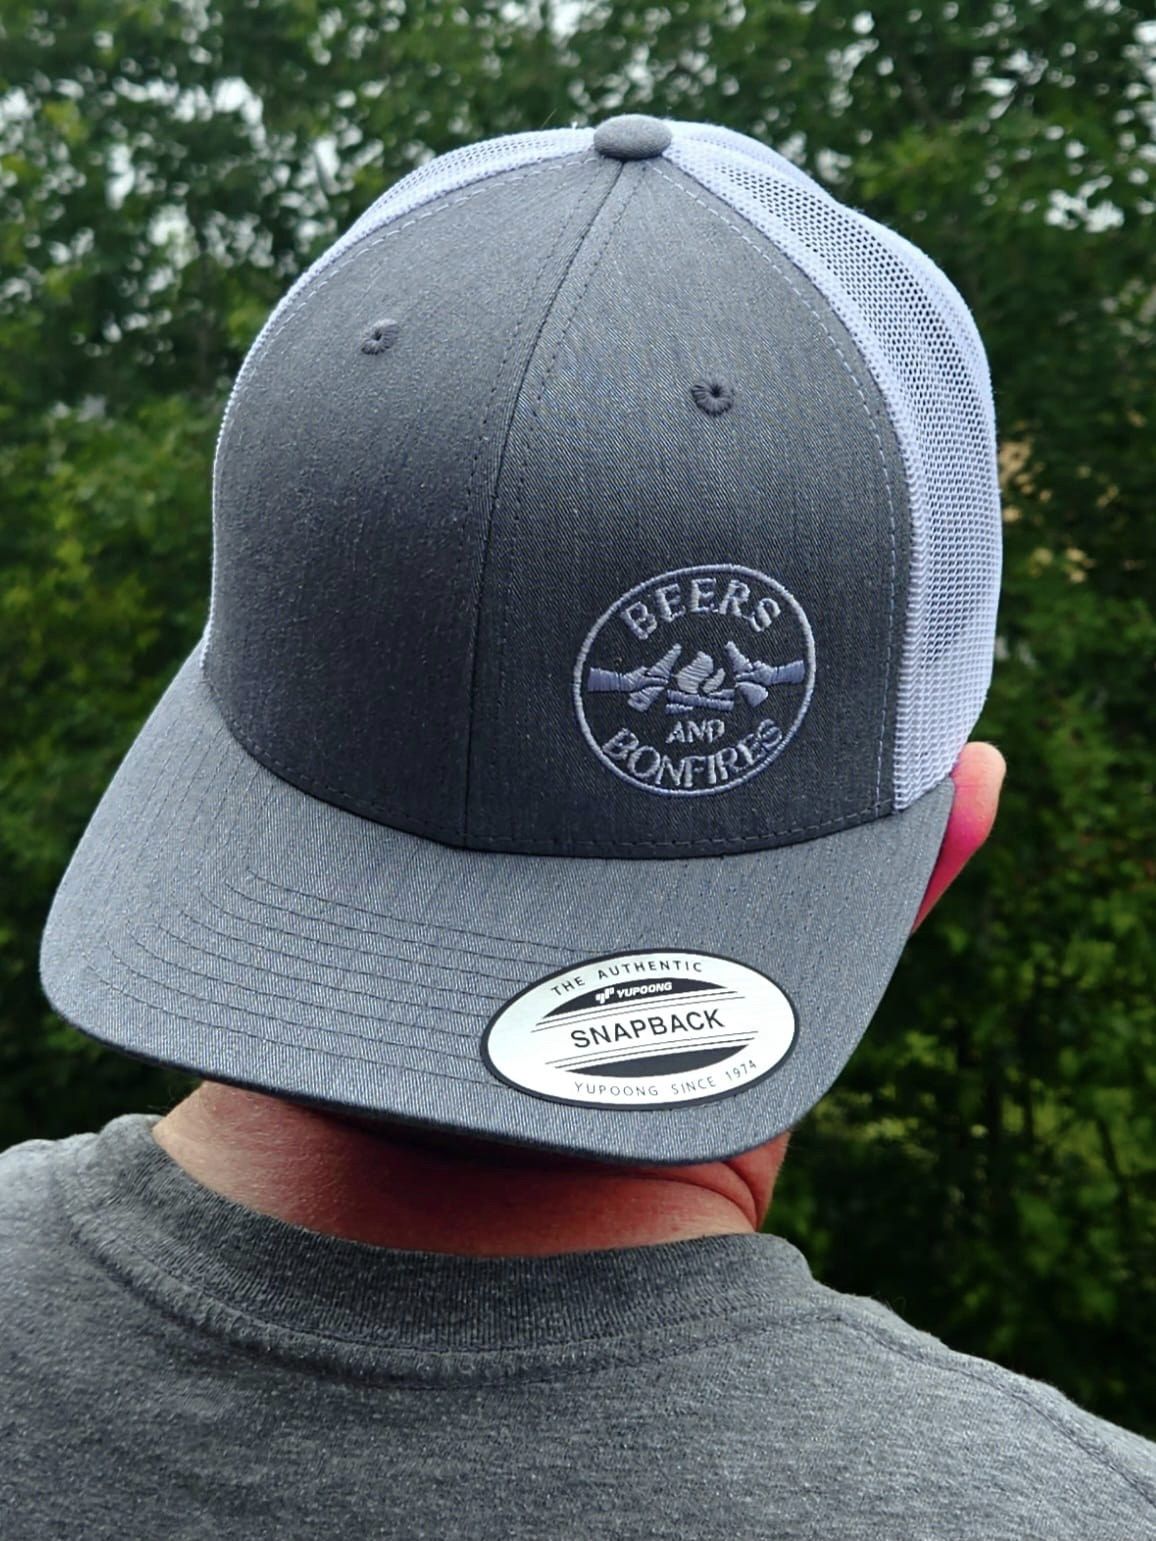 Classic Grey/White Mesh Snapback Hat